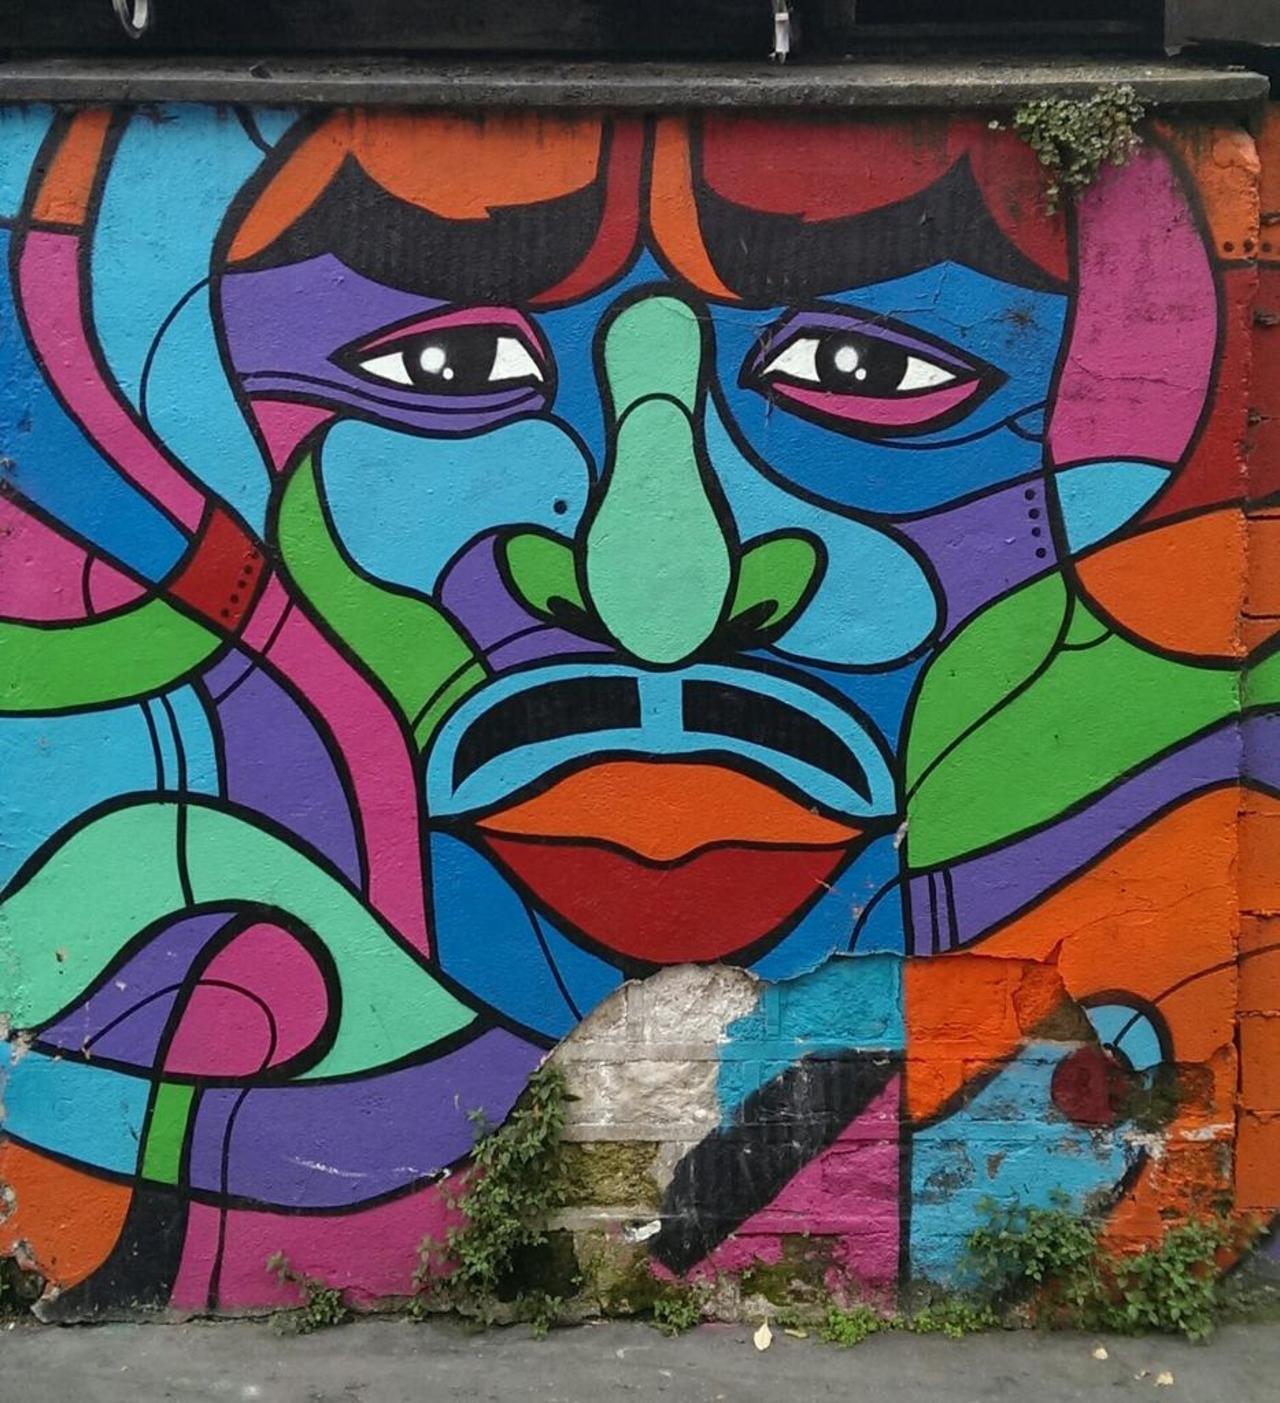 #streetart #streetarteverywhere #graffitiart #graffiti #arturbain #urbanart #mur #painting #crew #Paris #iloveparis http://t.co/dIzpi5UjVq